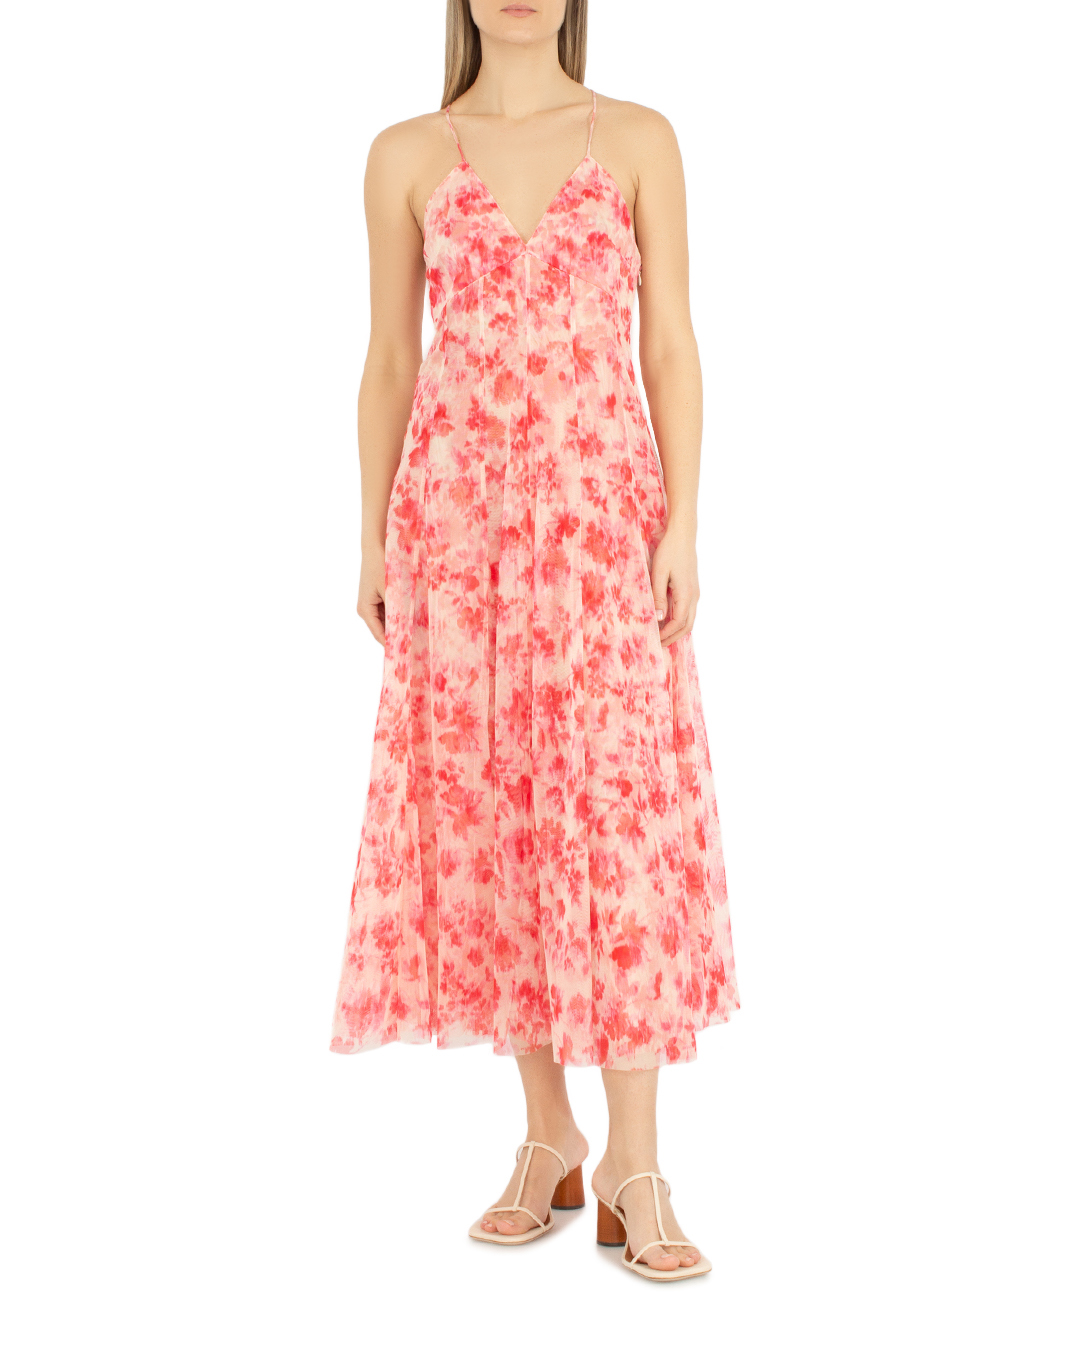 платье PHILOSOPHY DI LORENZO SERAFINI A0411.24 розовый+бежевый 38, размер 38, цвет розовый+бежевый A0411.24 розовый+бежевый 38 - фото 2